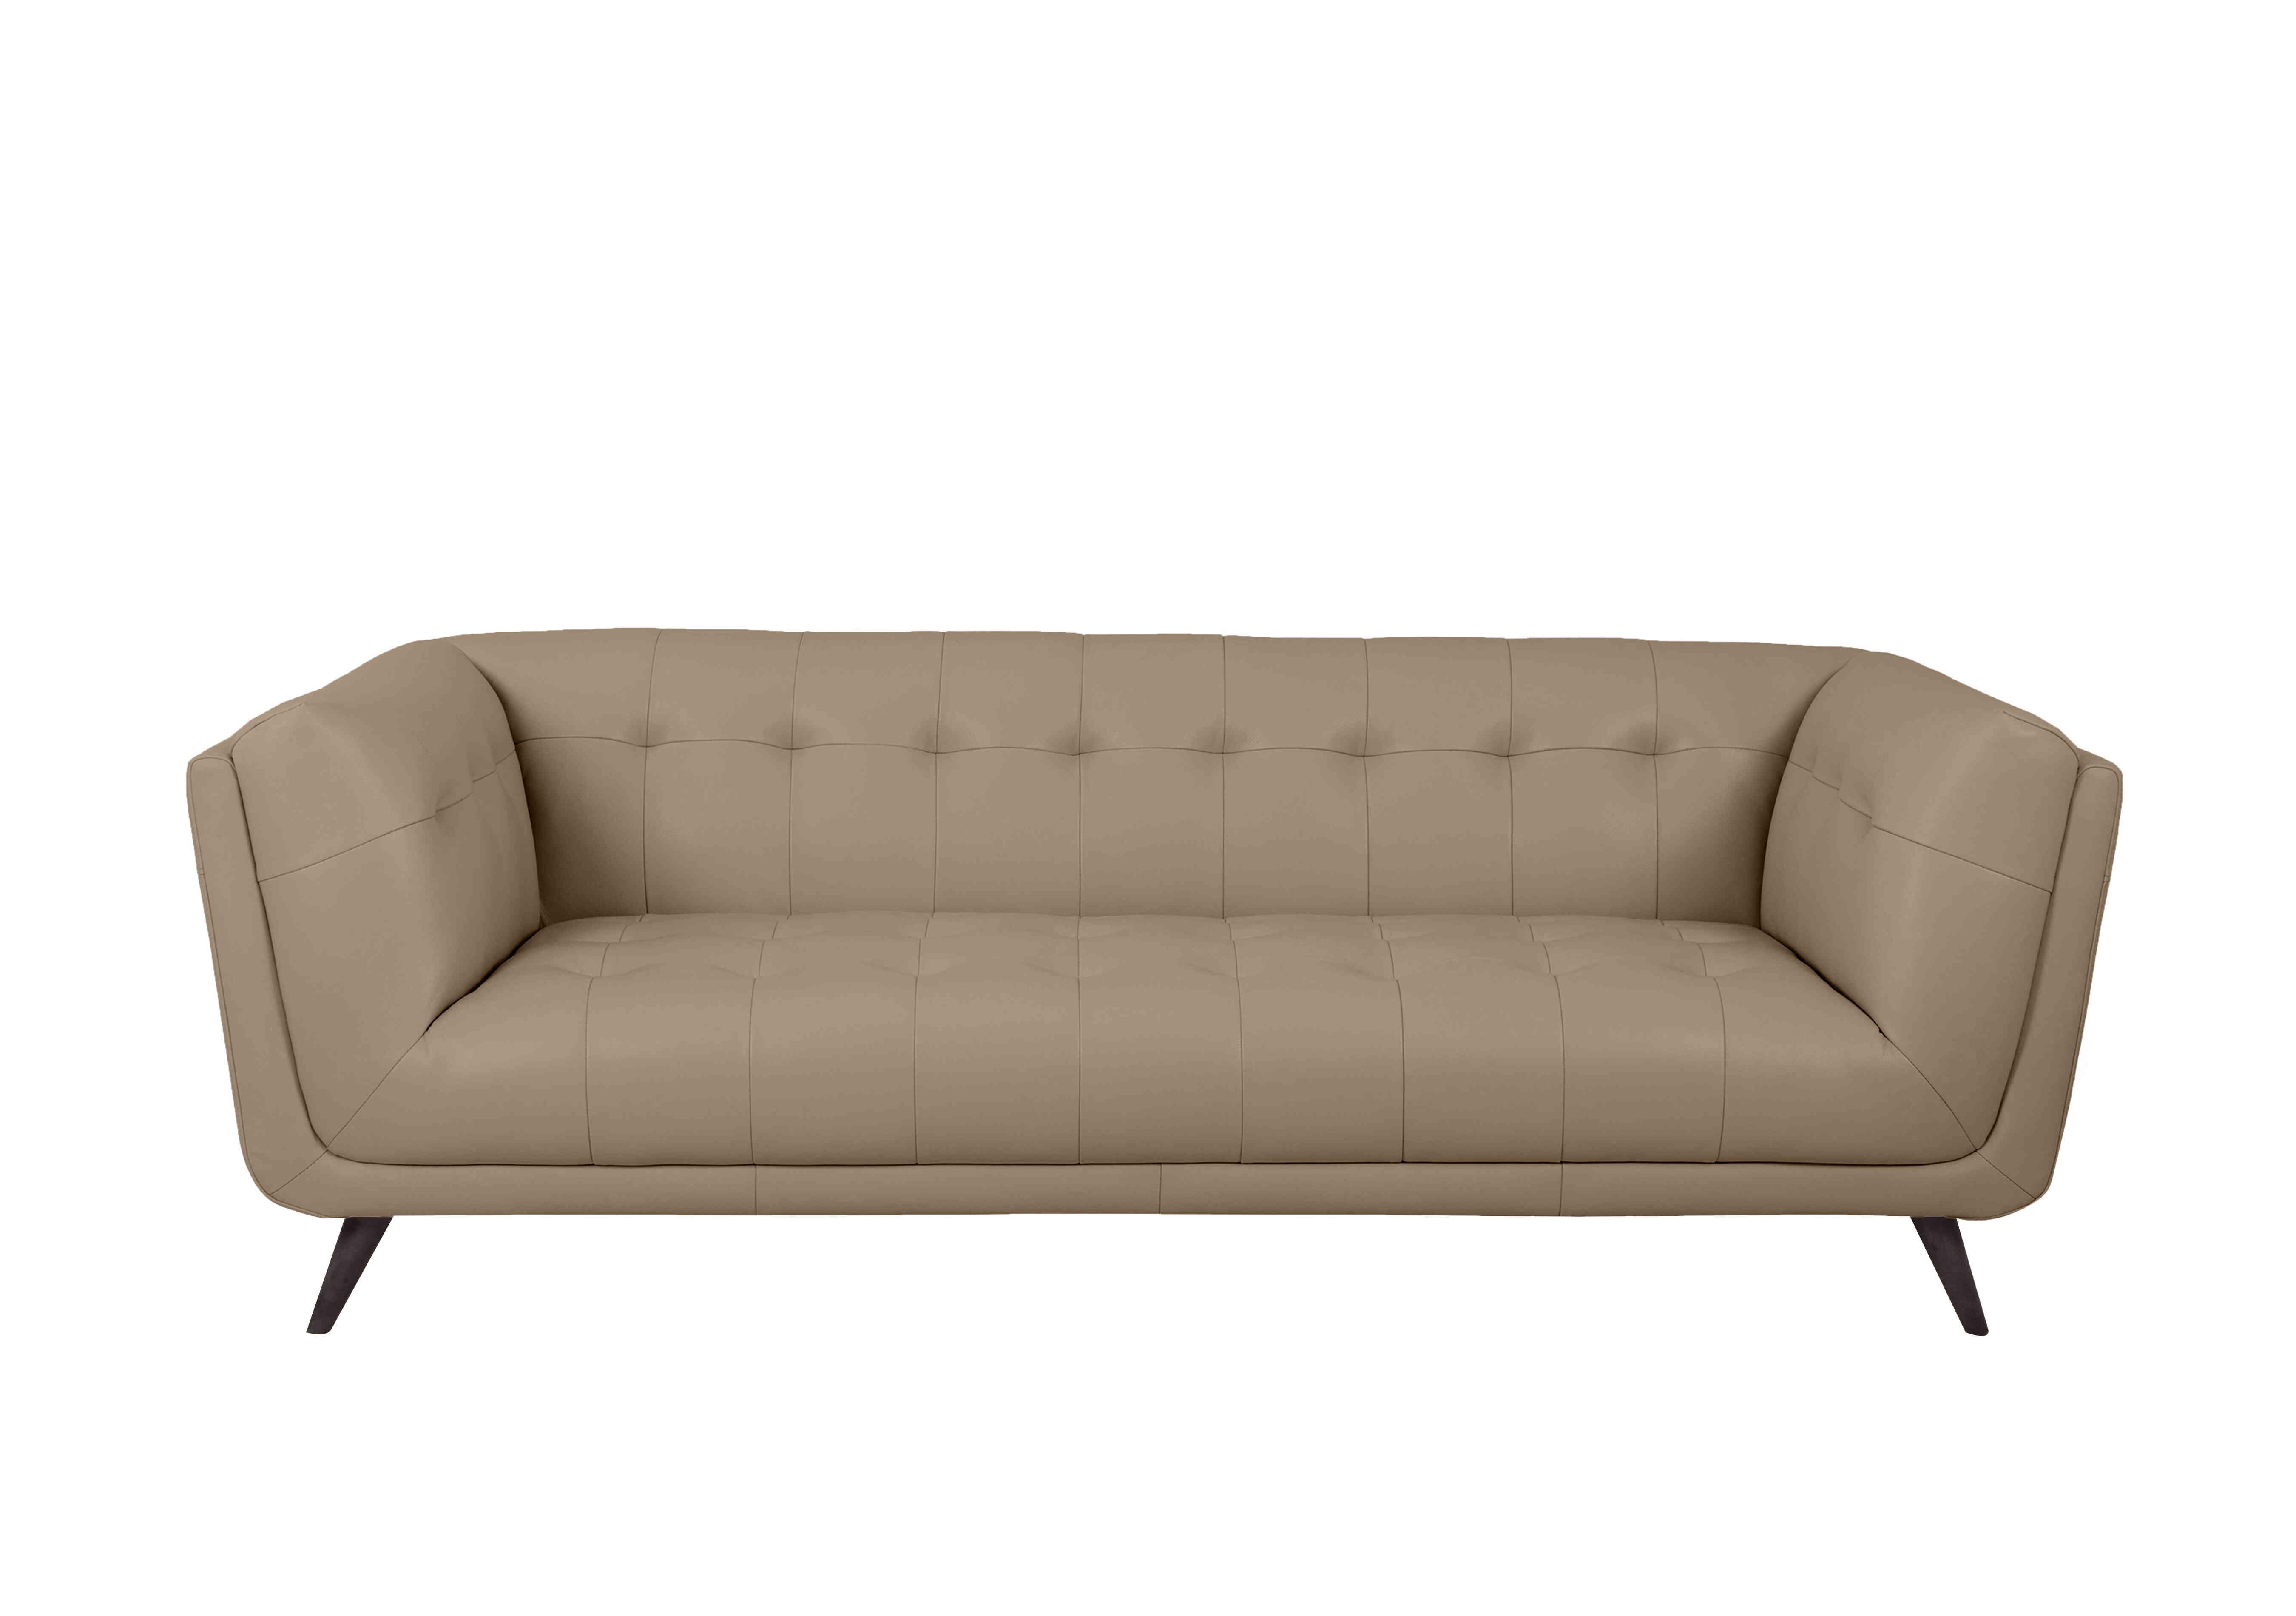 Rene 3 Seater Leather Sofa in Montana Barley on Furniture Village